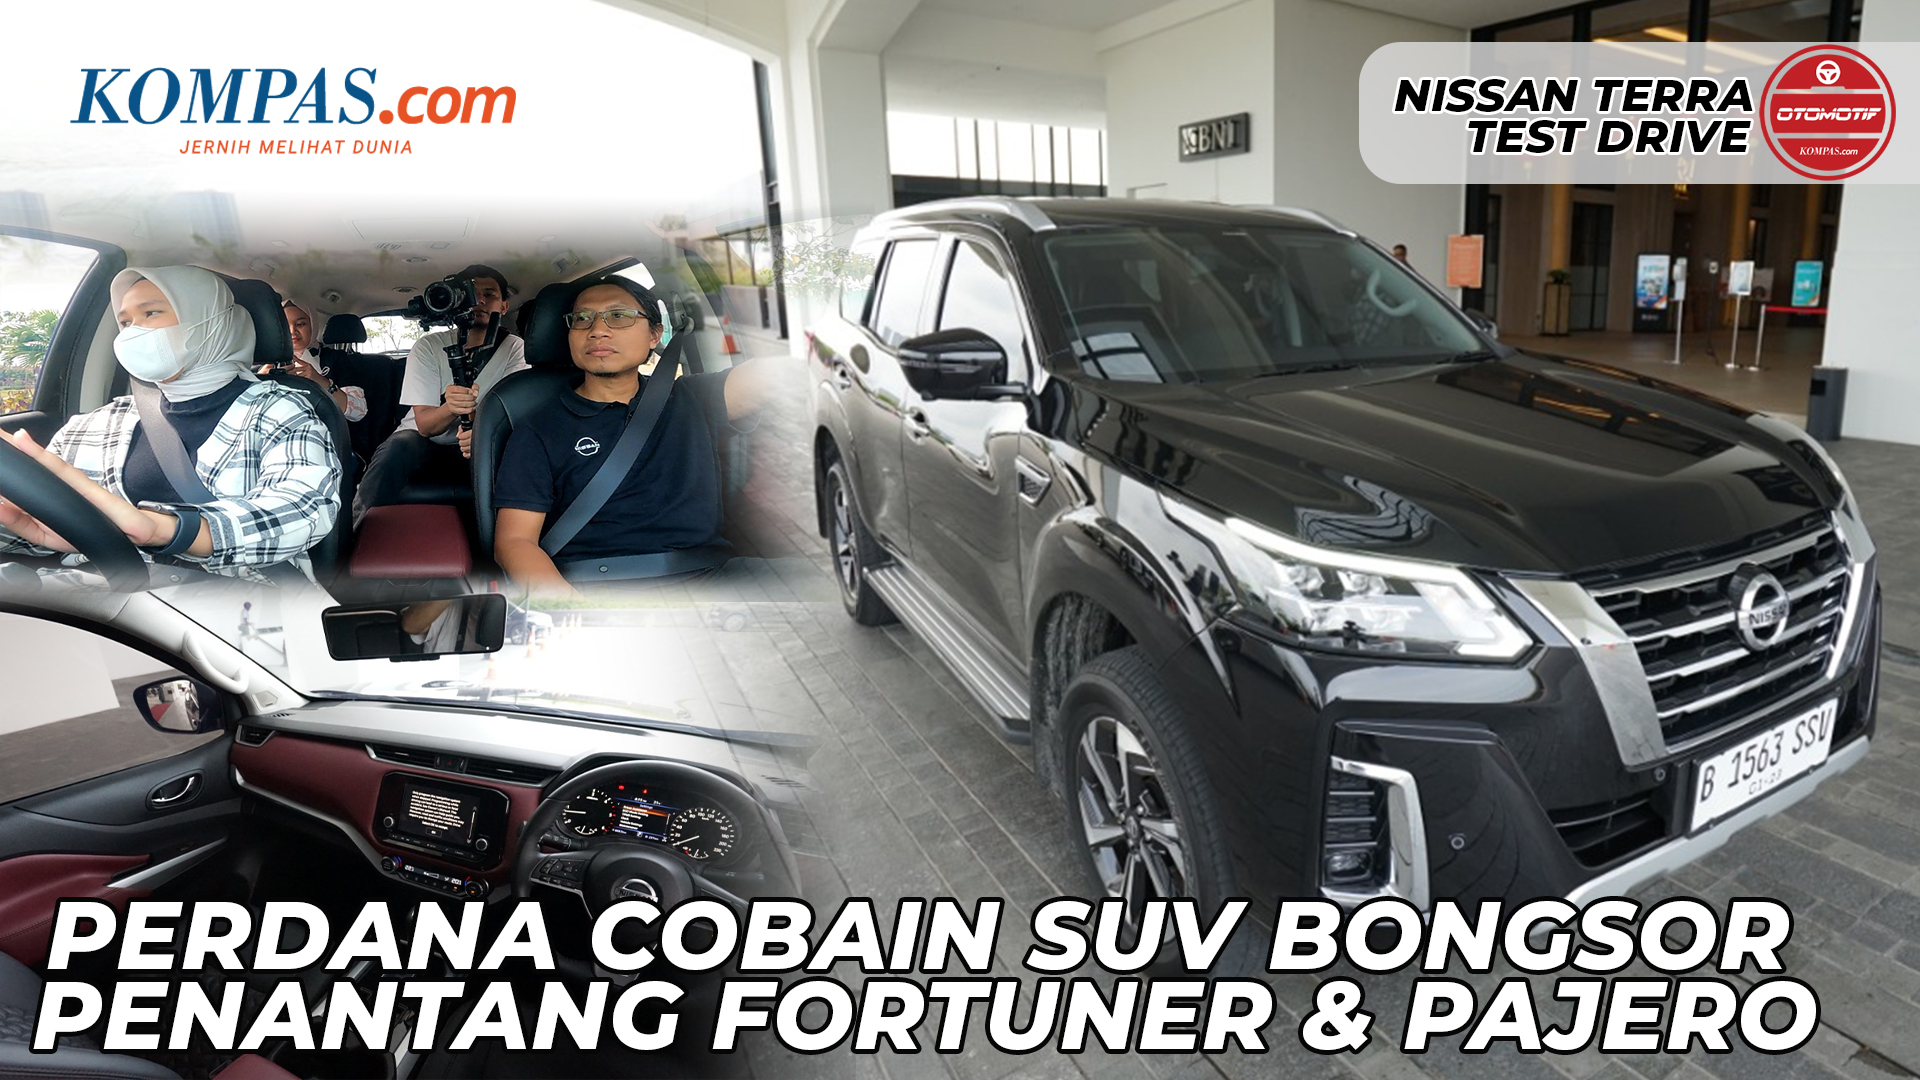 TEST DRIVE | NISSAN TERRA | Perdana Cobain SUV Bongsor Penantang Fortuner & Pajero